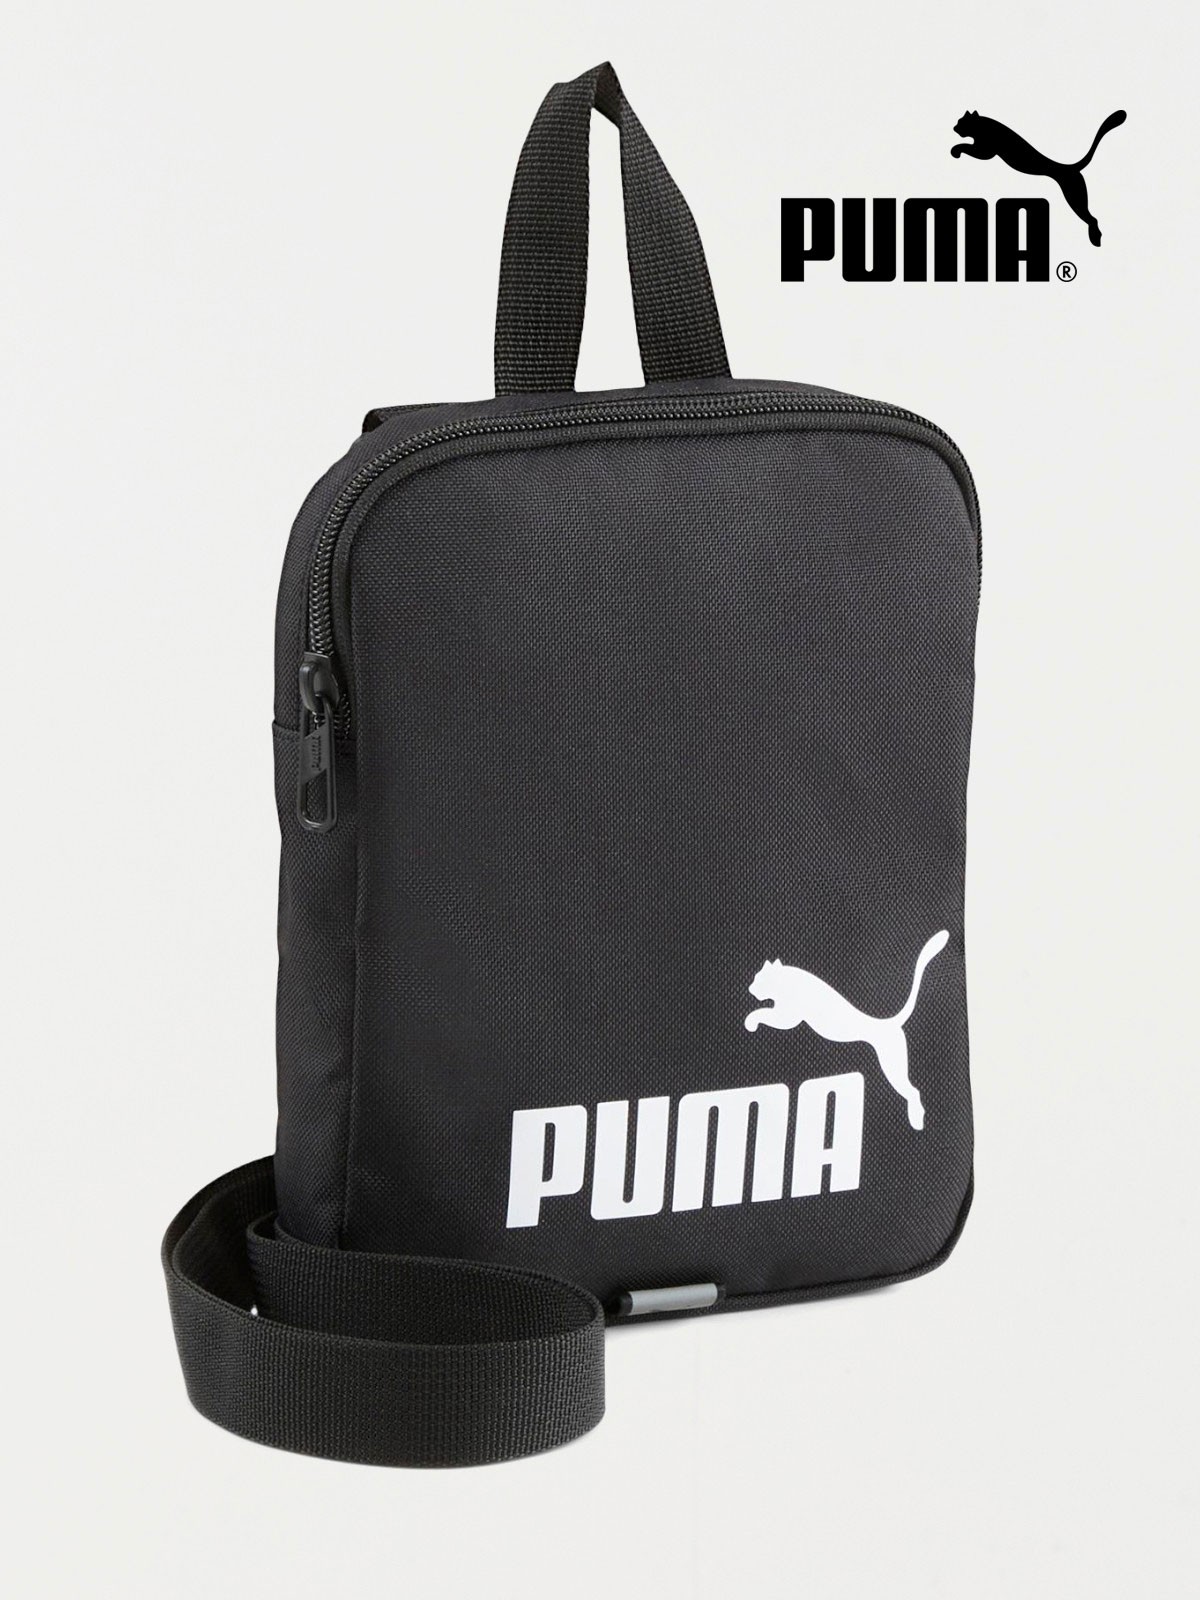 Sacoche Puma noir homme - DistriCenter